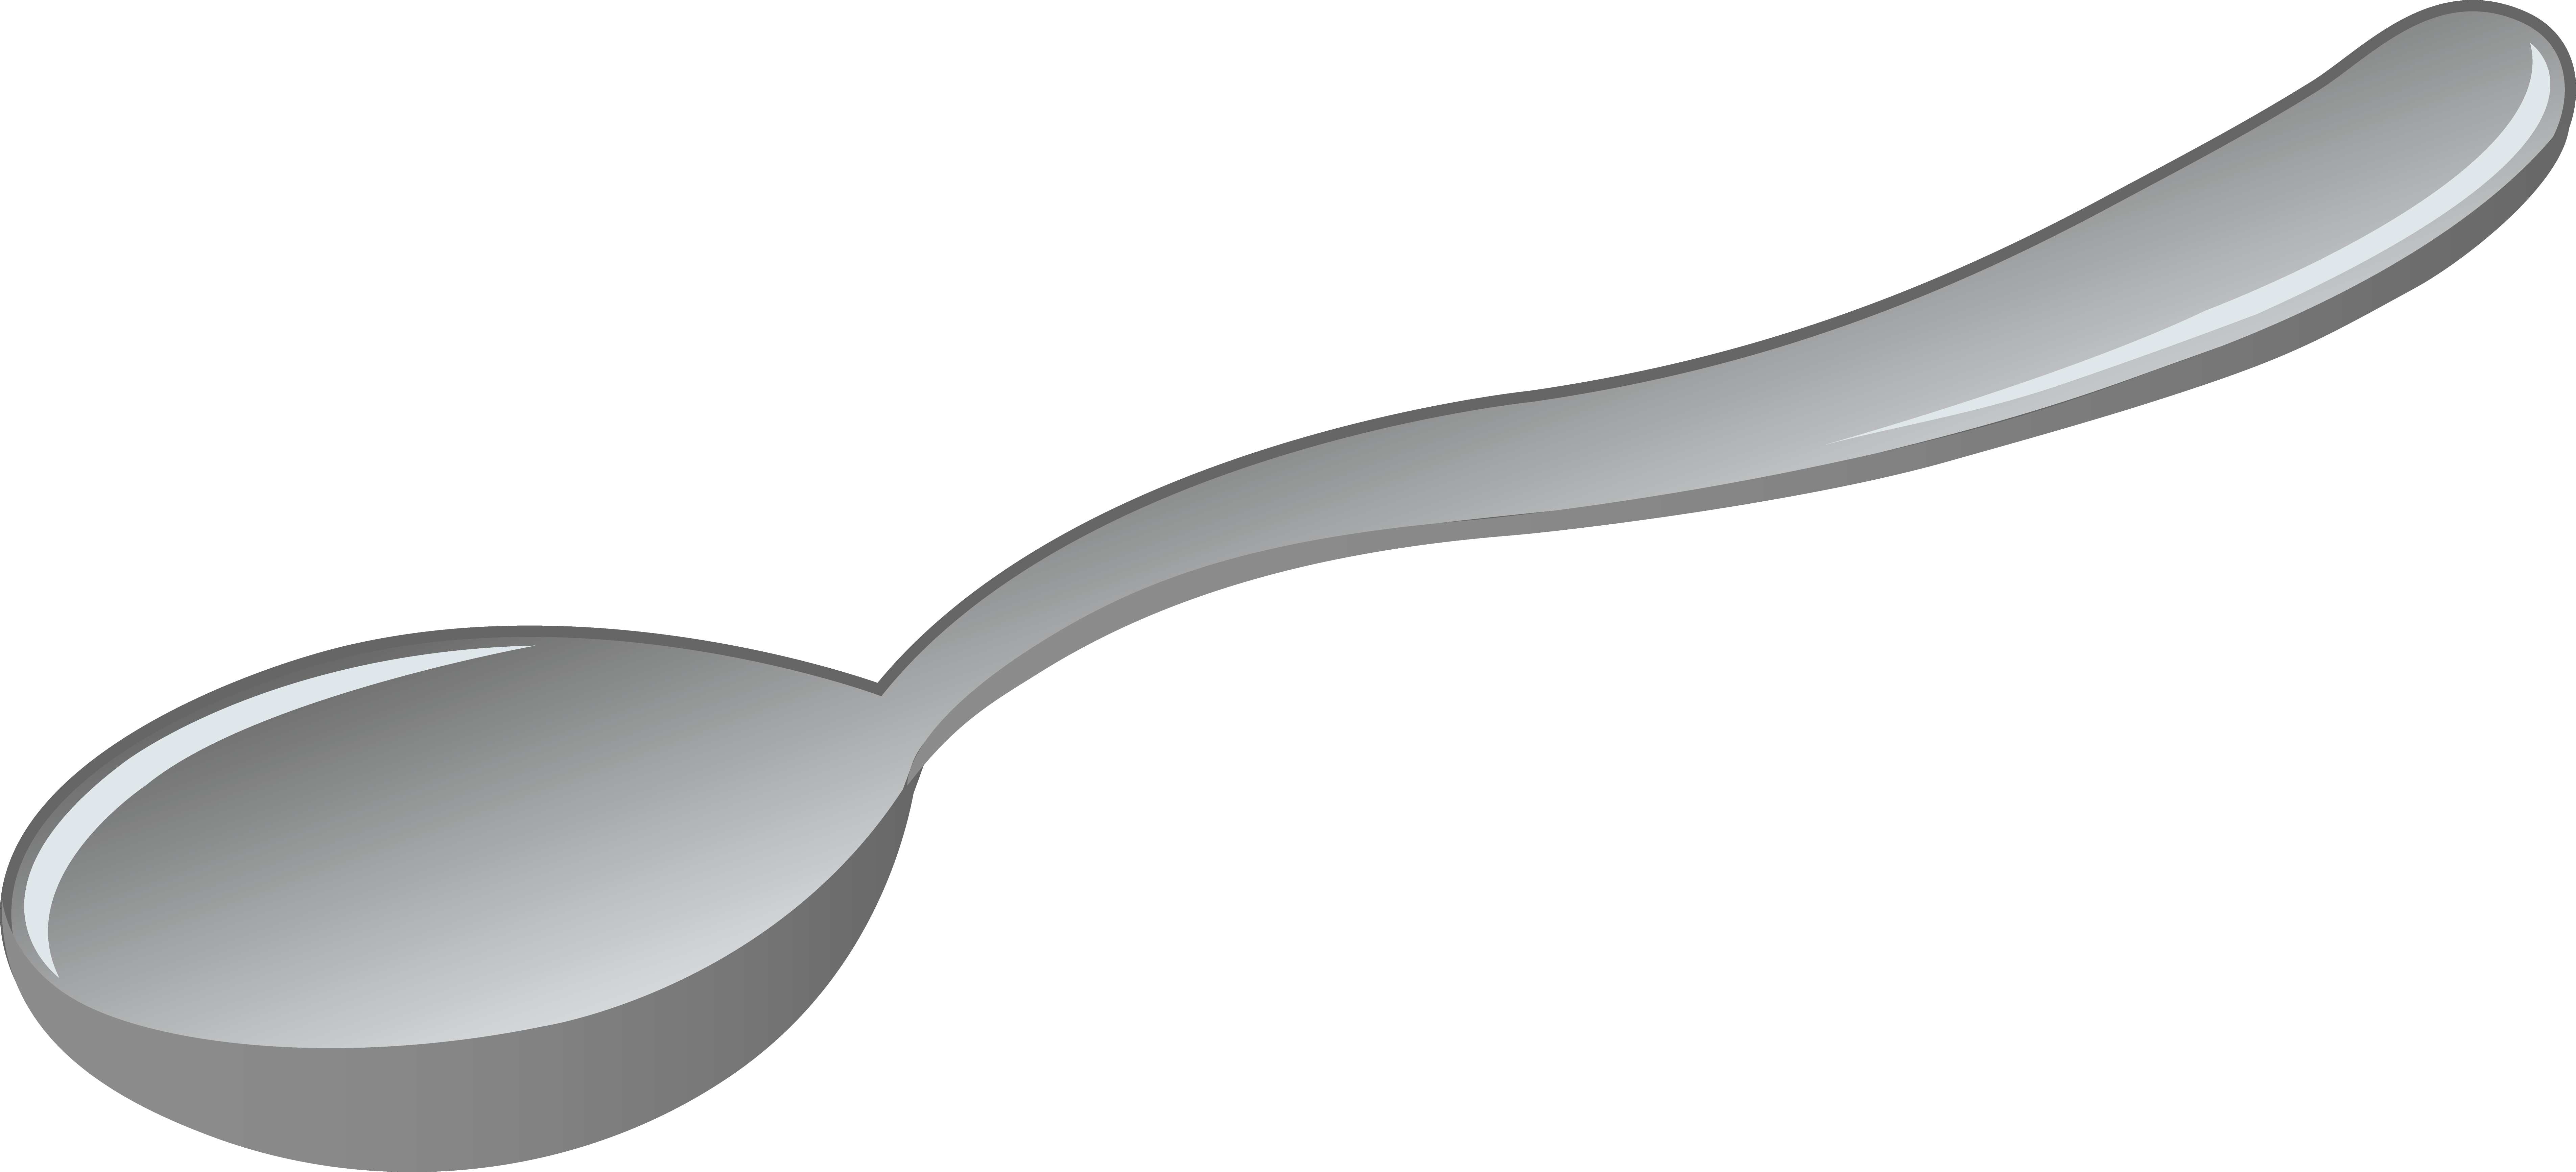 Spoon PNG HD - 131965